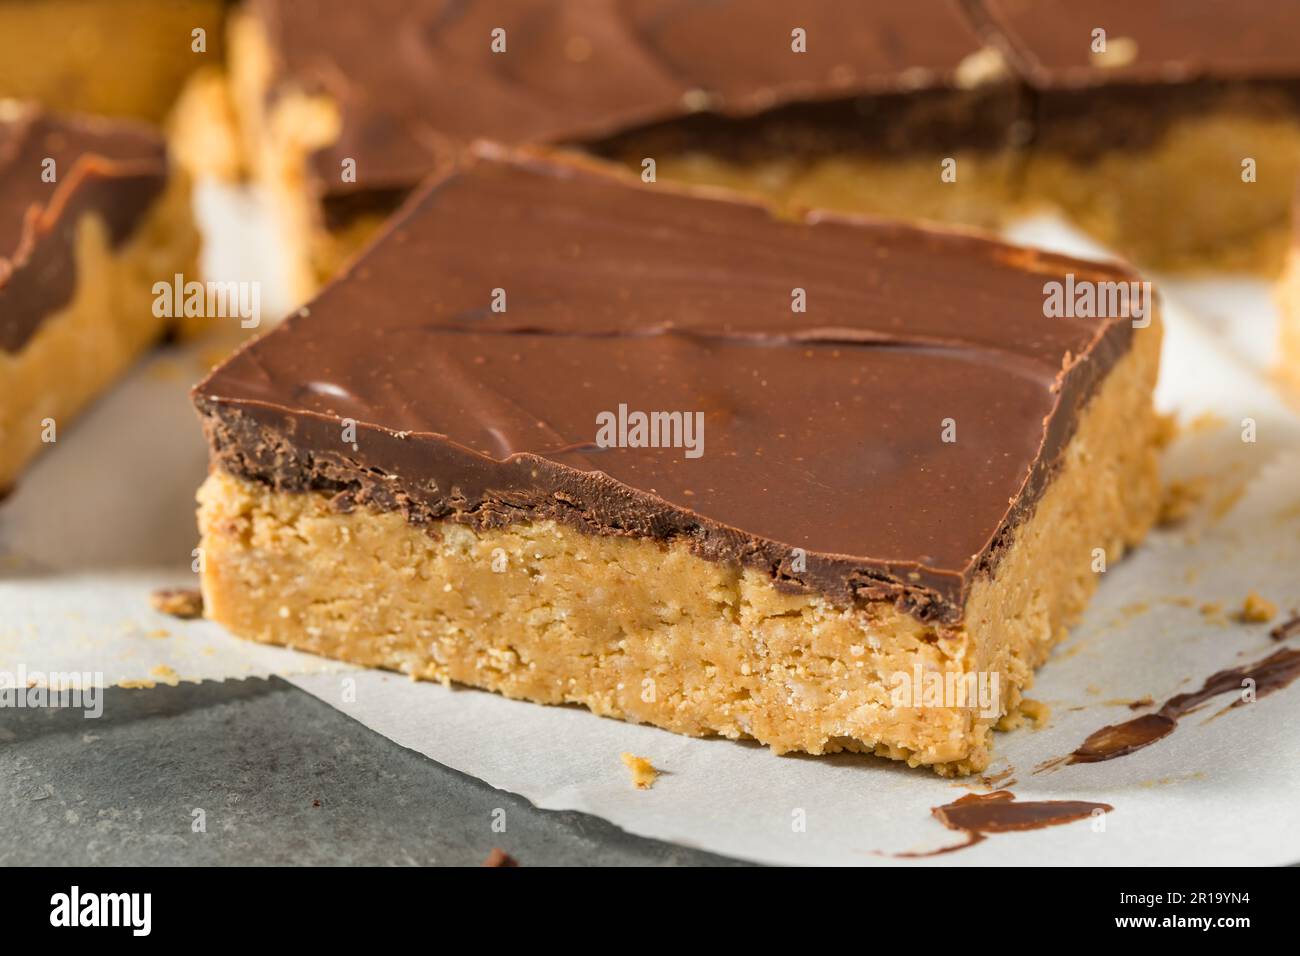 Homemade Chocolate Peanut Butter Bar for Dessert Stock Photo